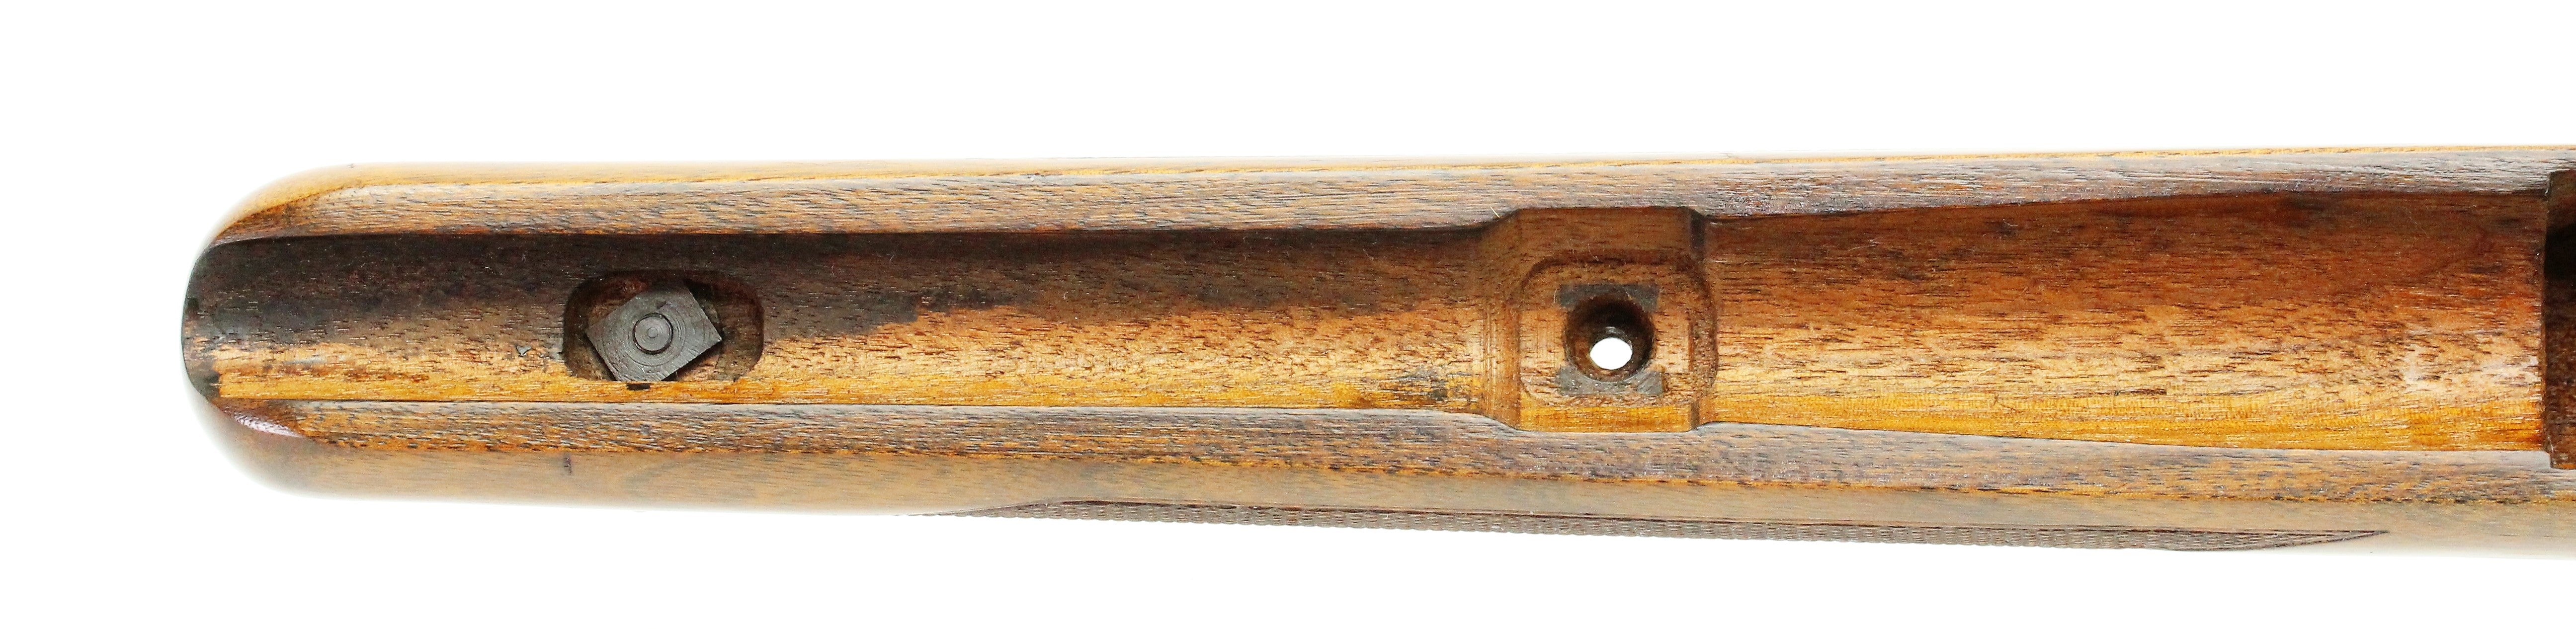 .30-06 Standard Rifle - 1950